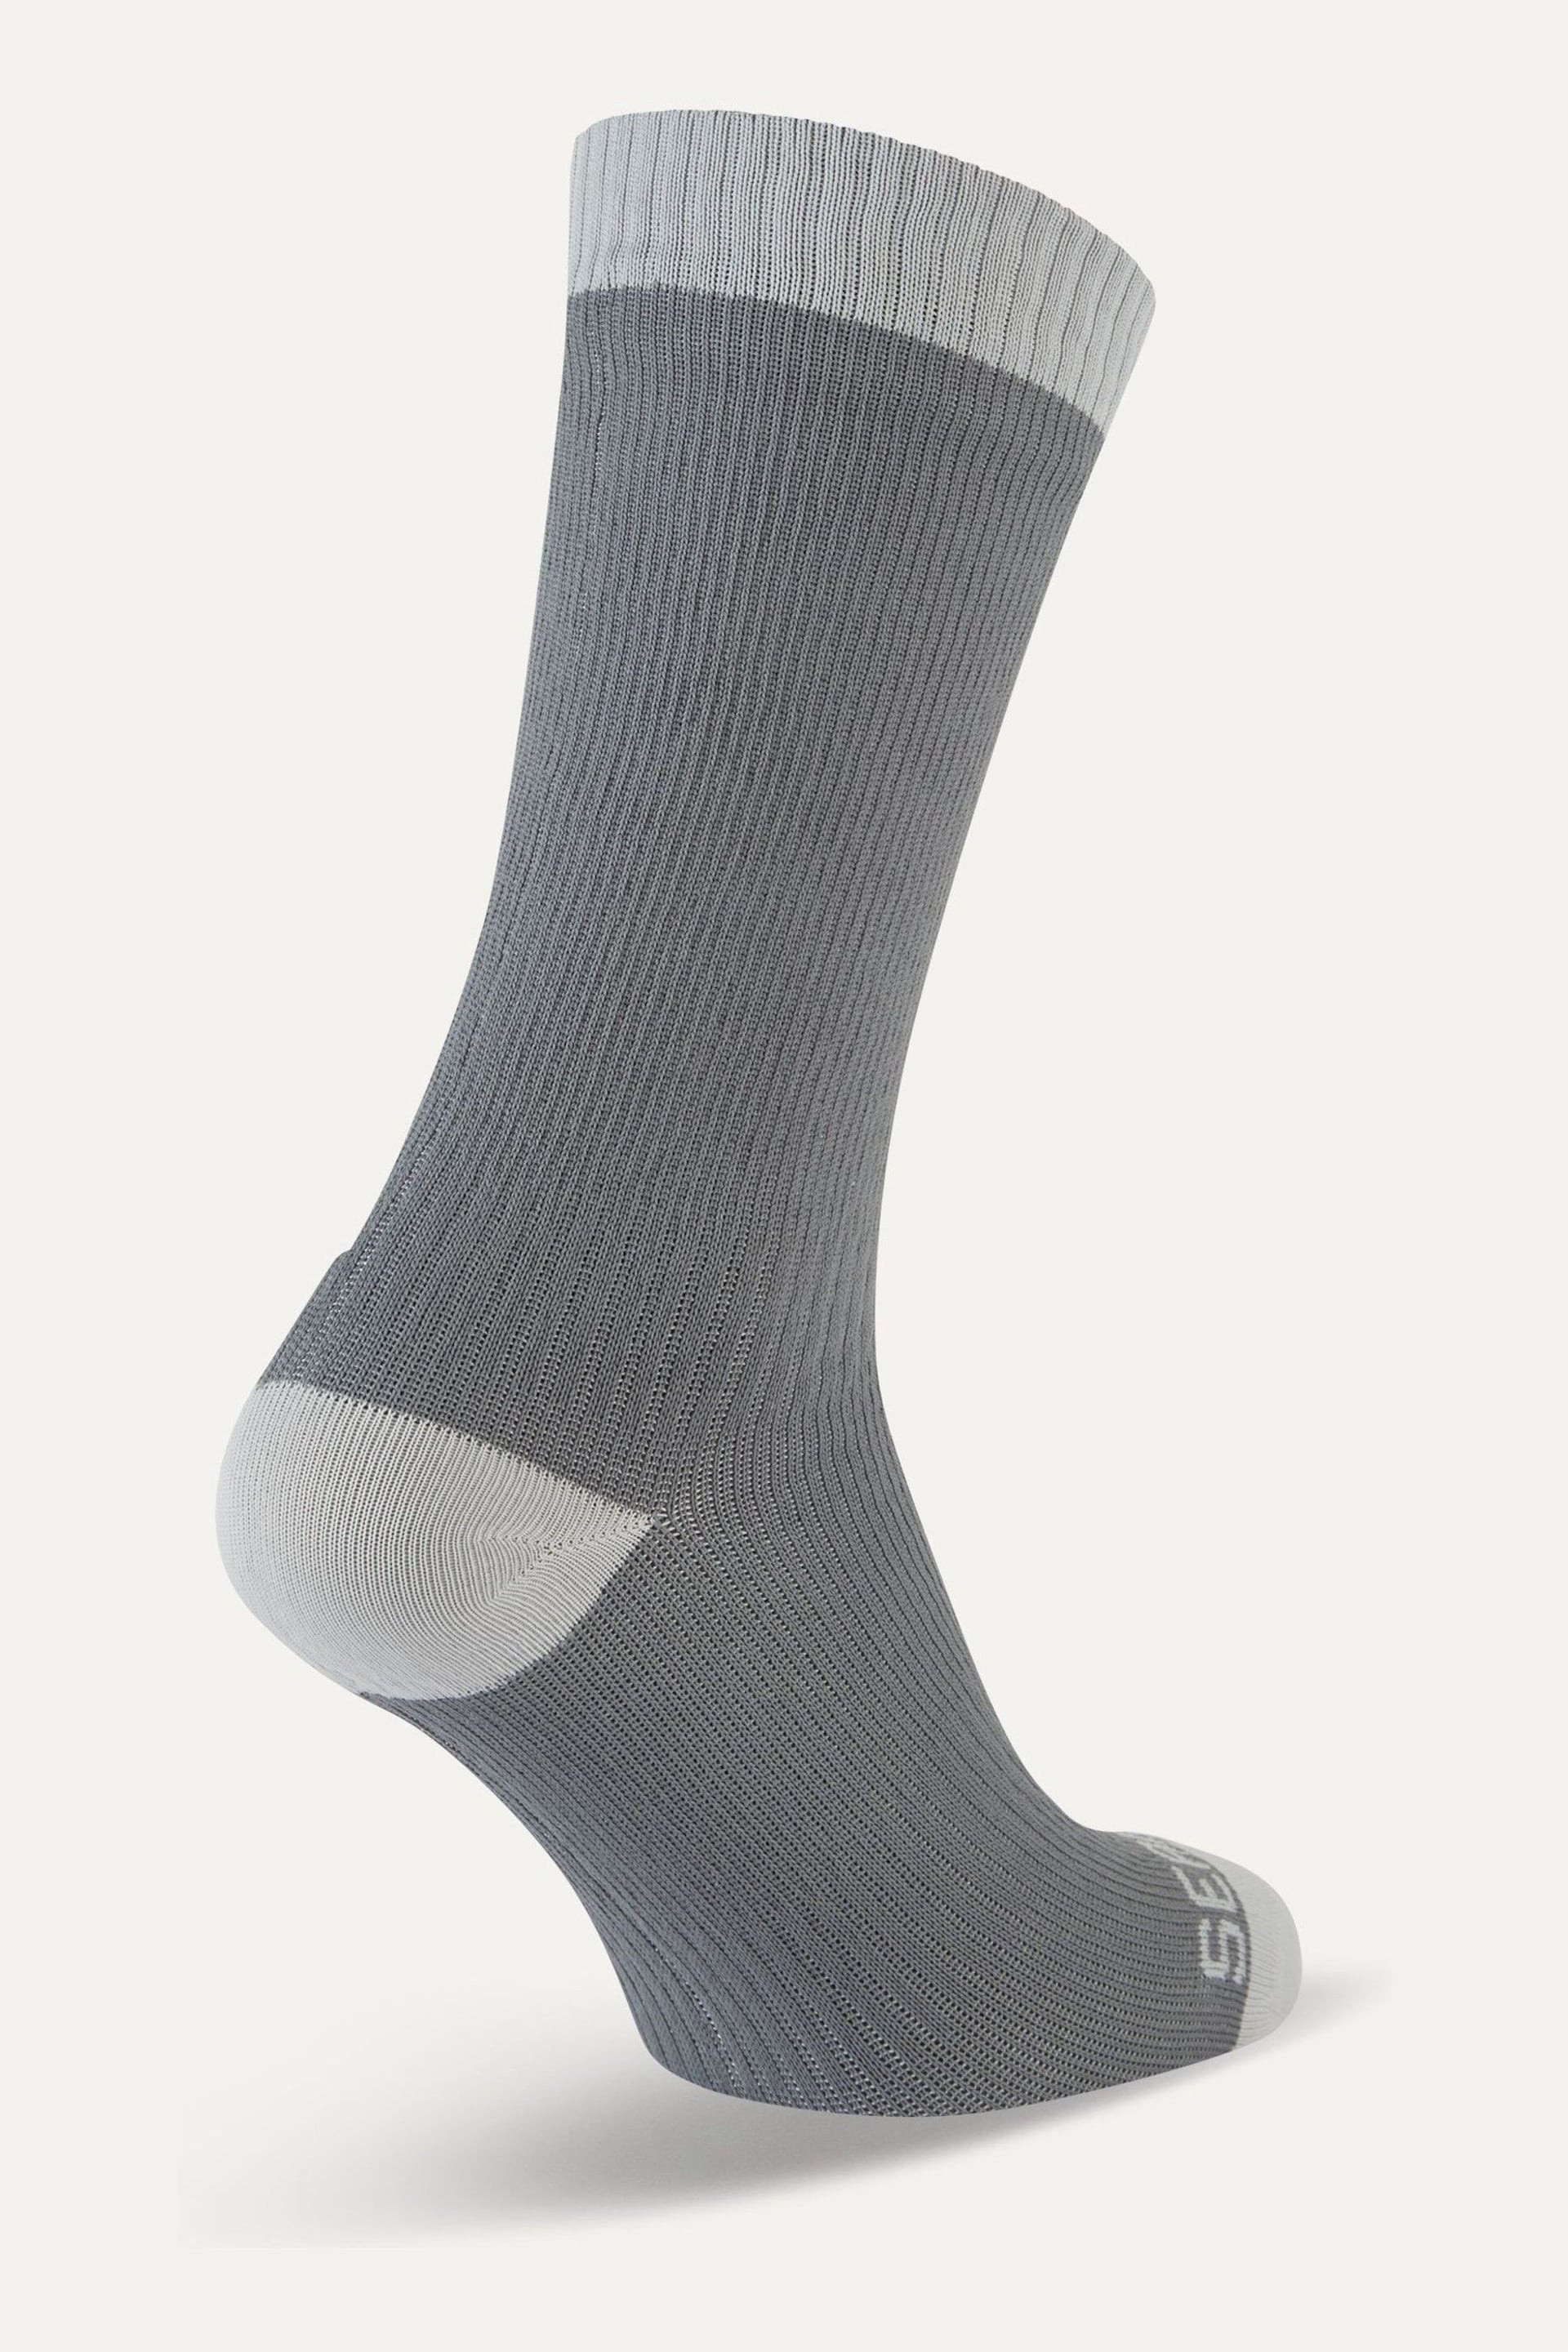 Sealskinz Wiveton Waterproof Warm Weather Mid Length Black Socks - Image 2 of 2